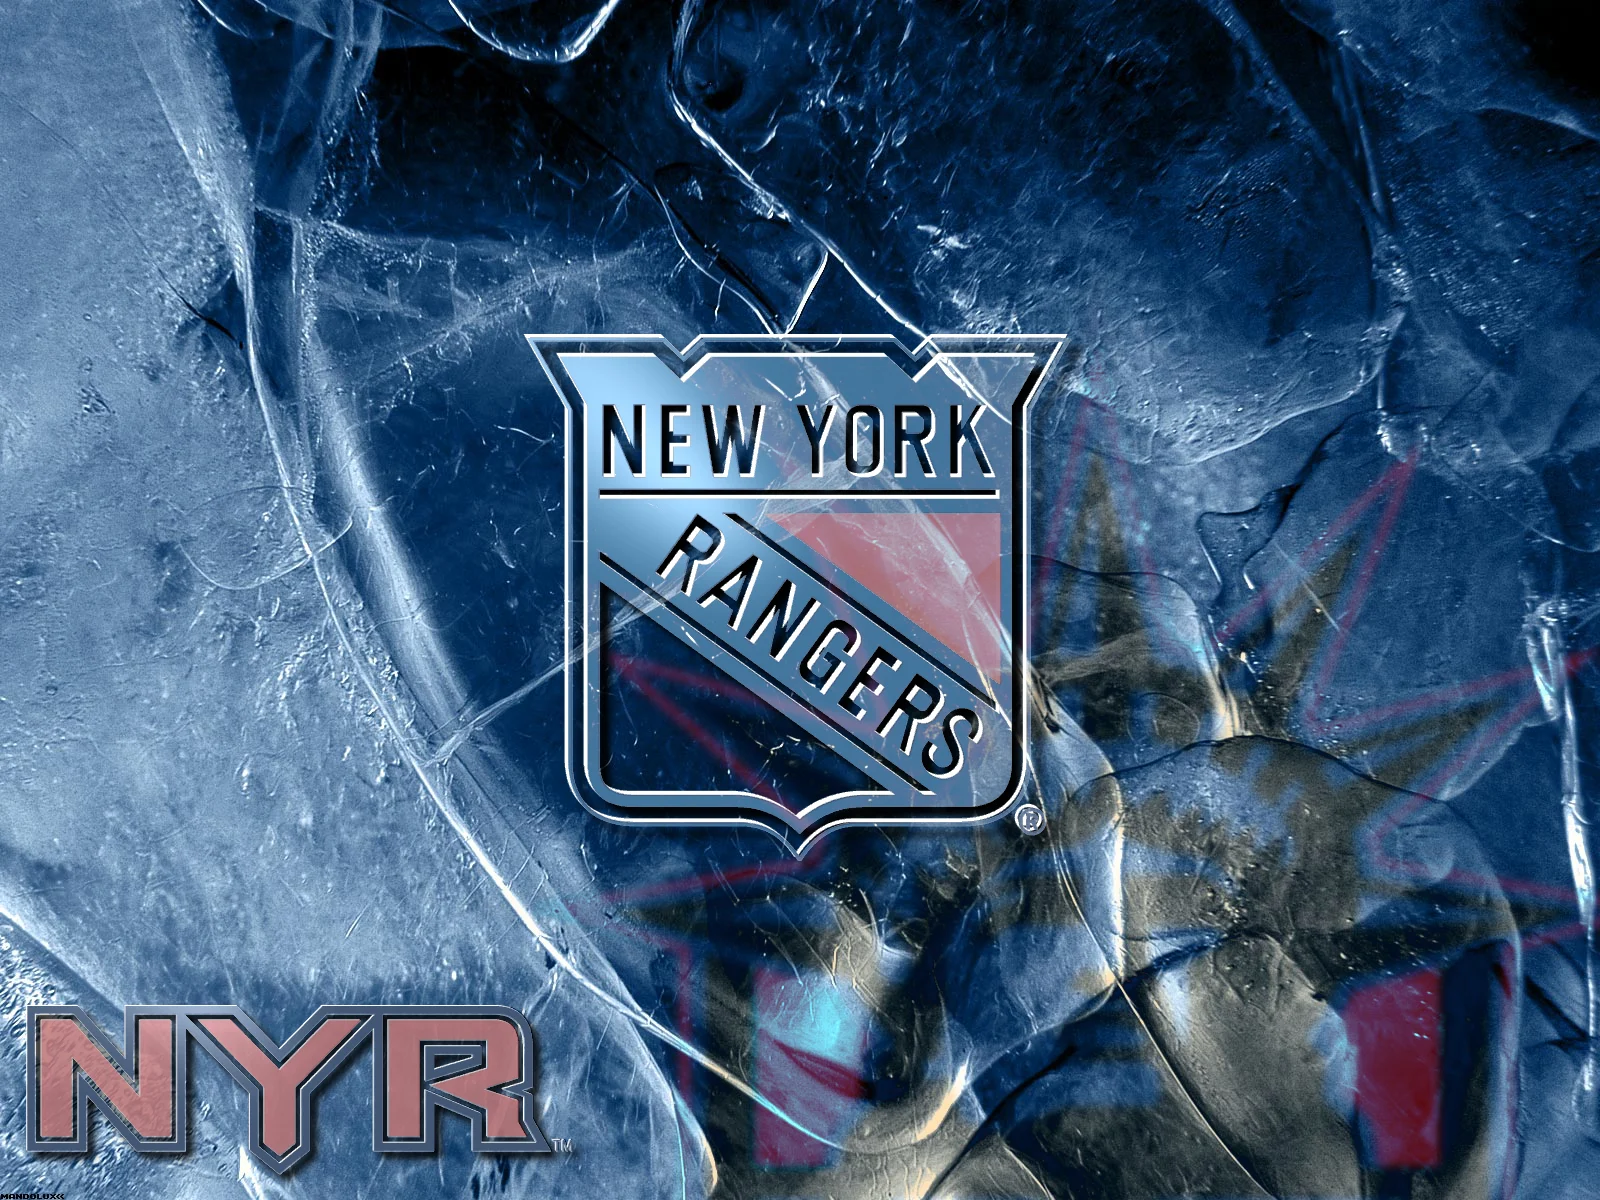 Background NY Rangers Wallpaper